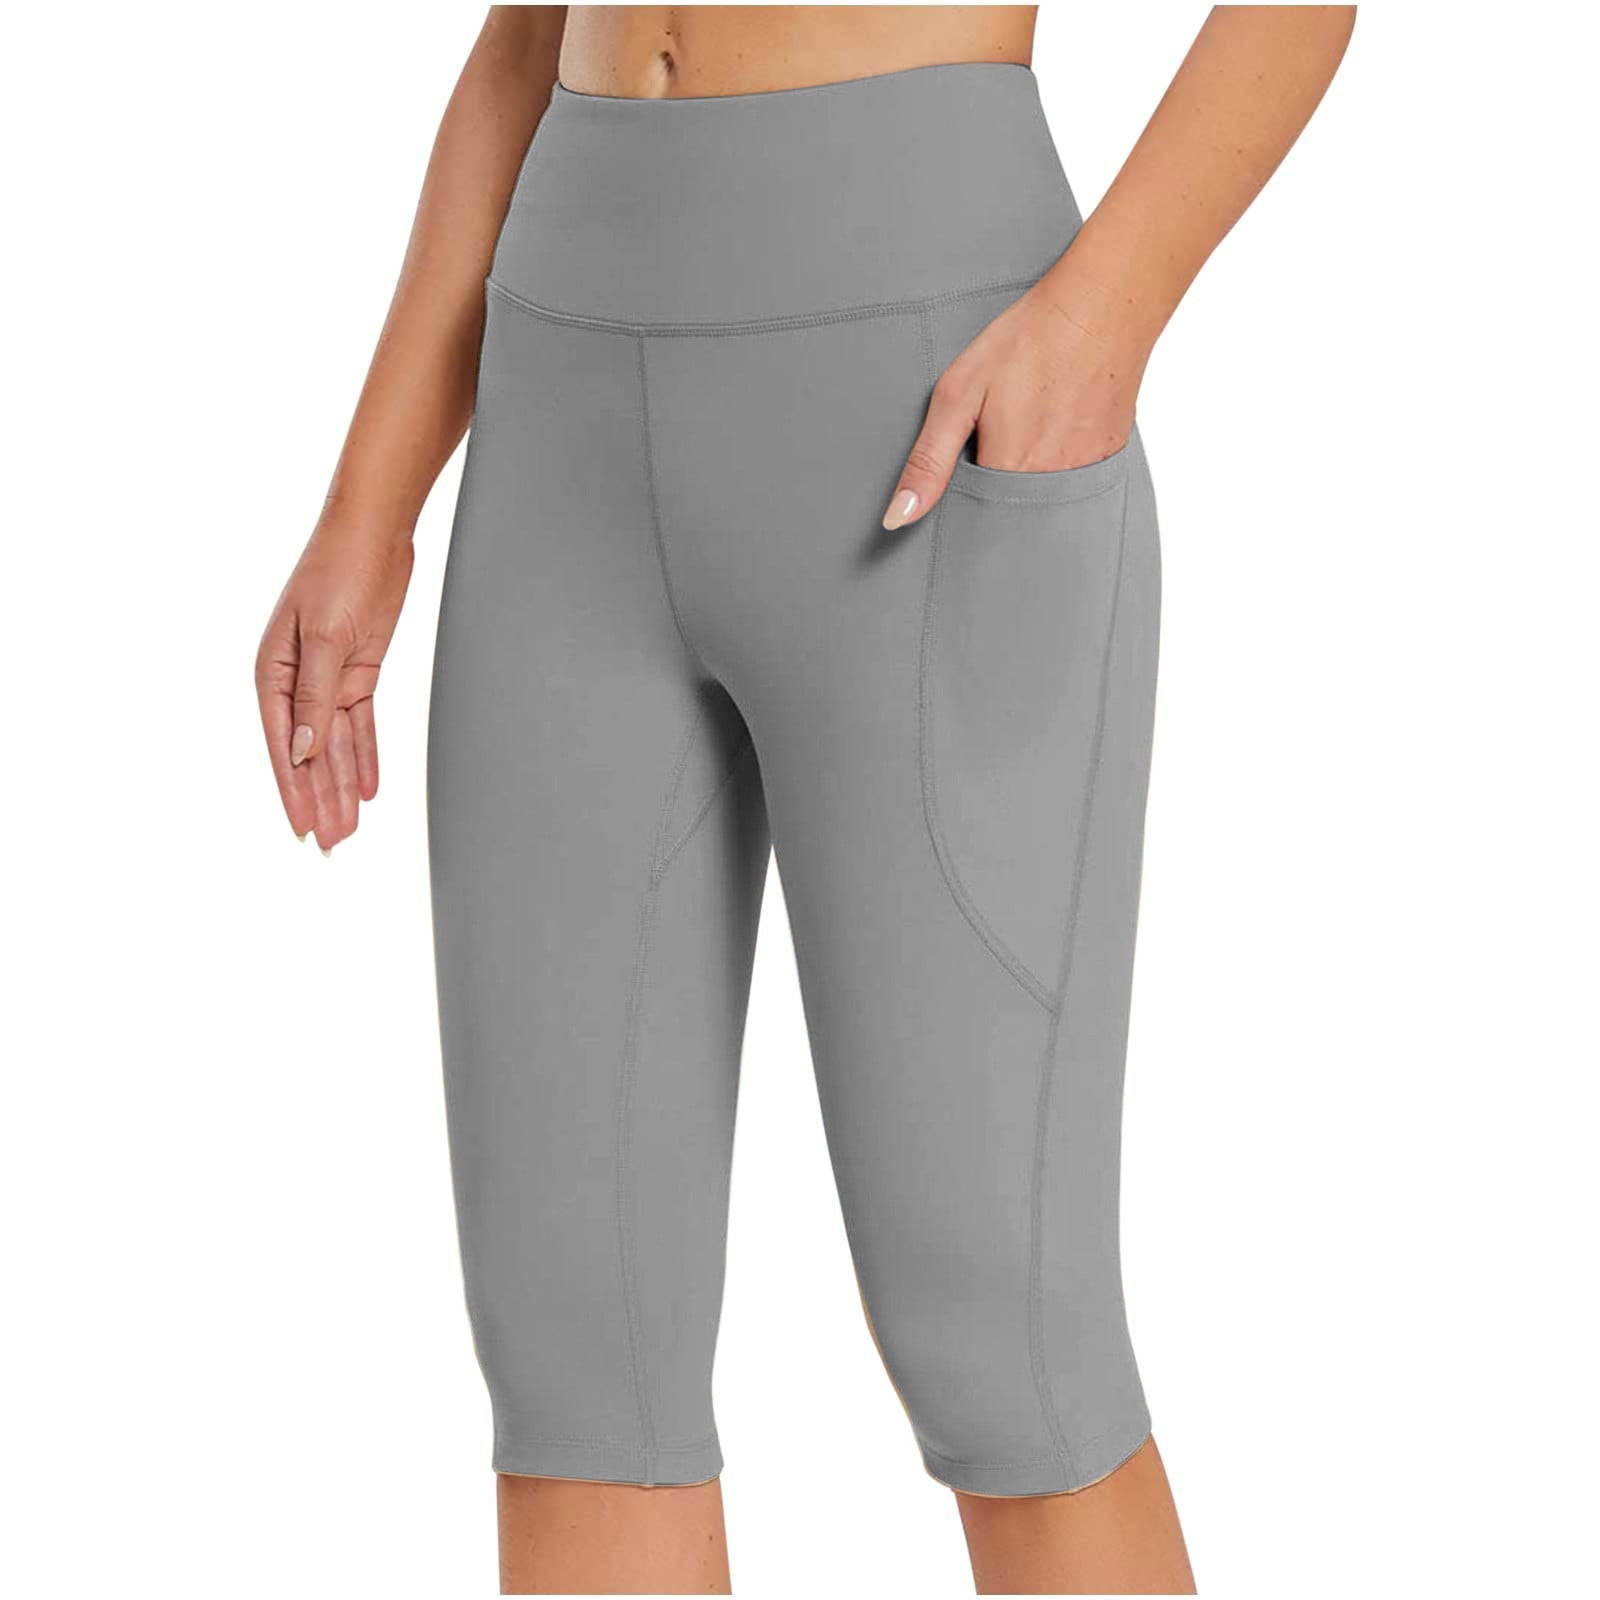 SYRINX High Waist Yoga Pants with Pockets for Women- Tummy Control